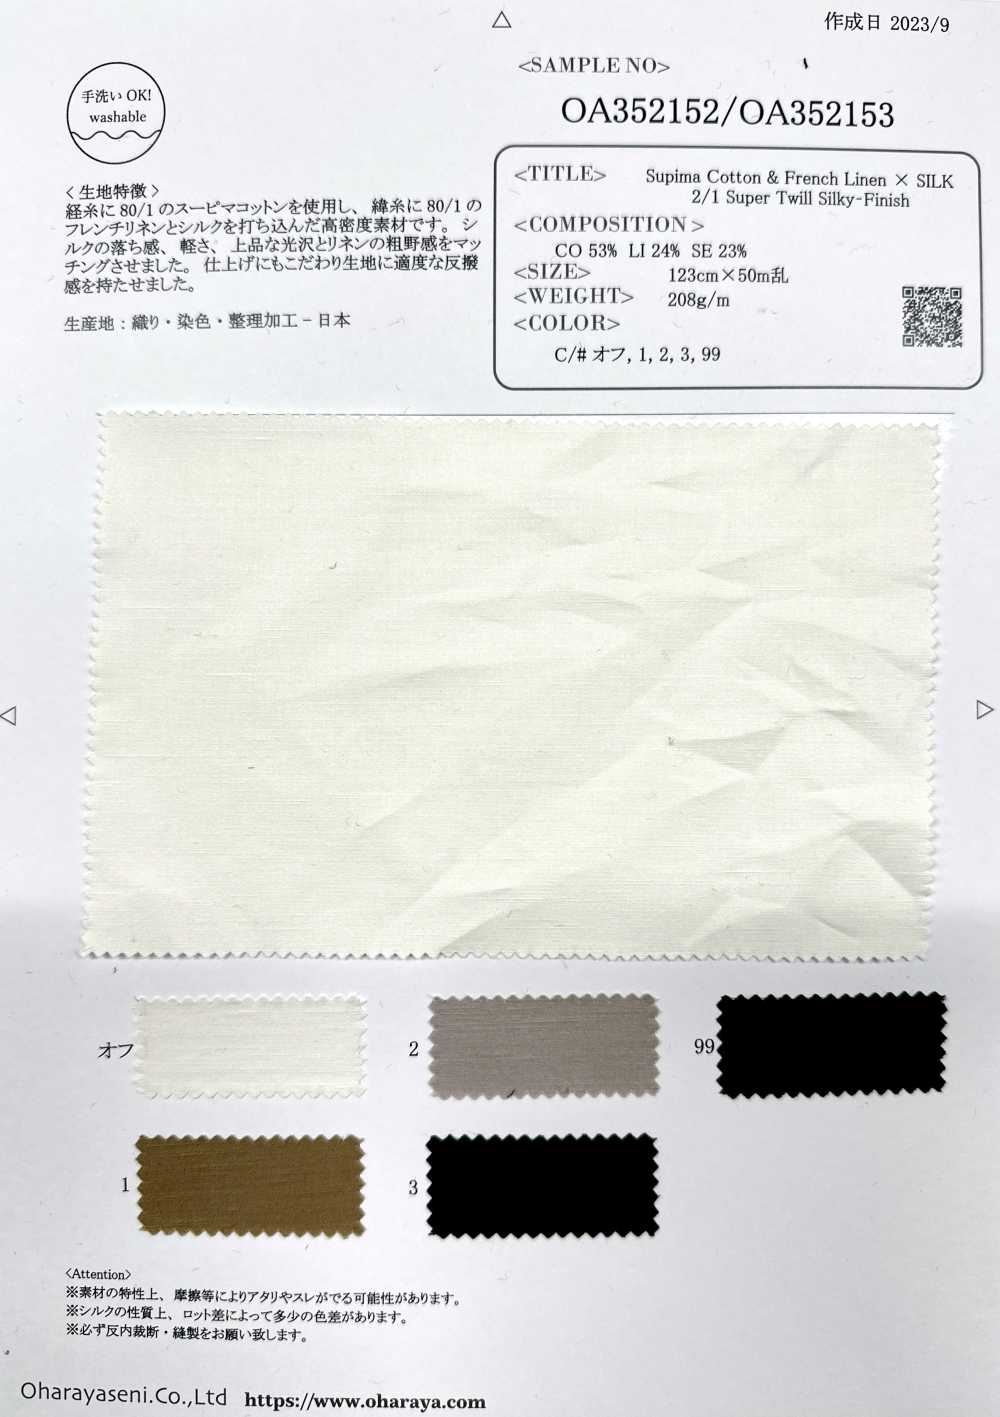 OA352153 Supima Cotton & French Linen × SILK 2/1 Super Twill Silky-Finish[원단] Oharayaseni